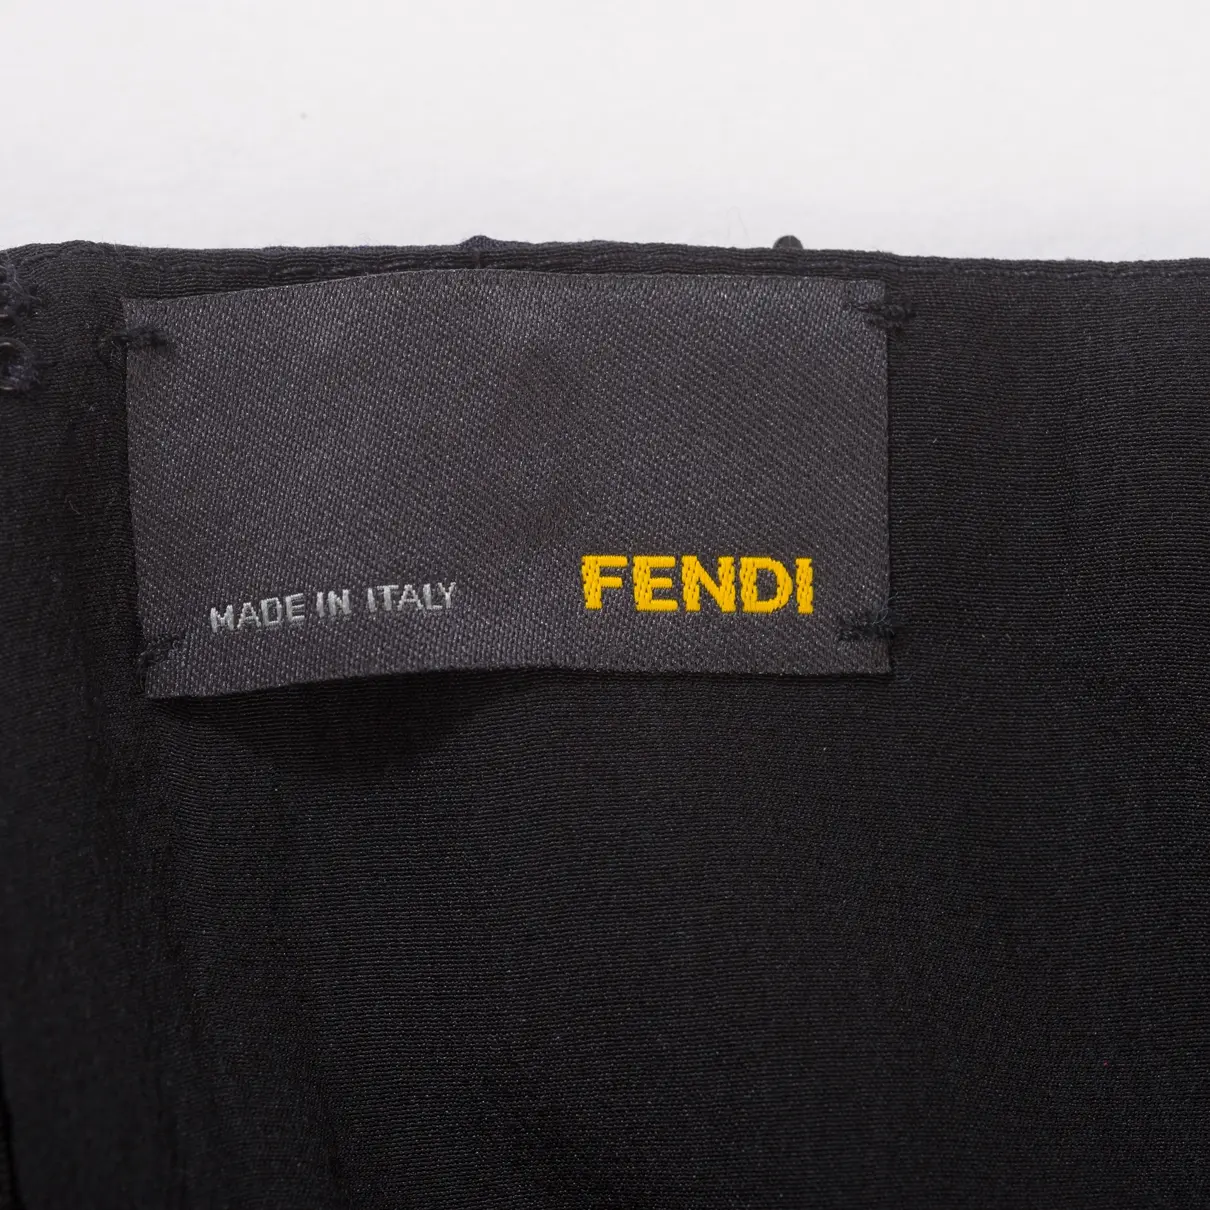 Buy Fendi DRESS online